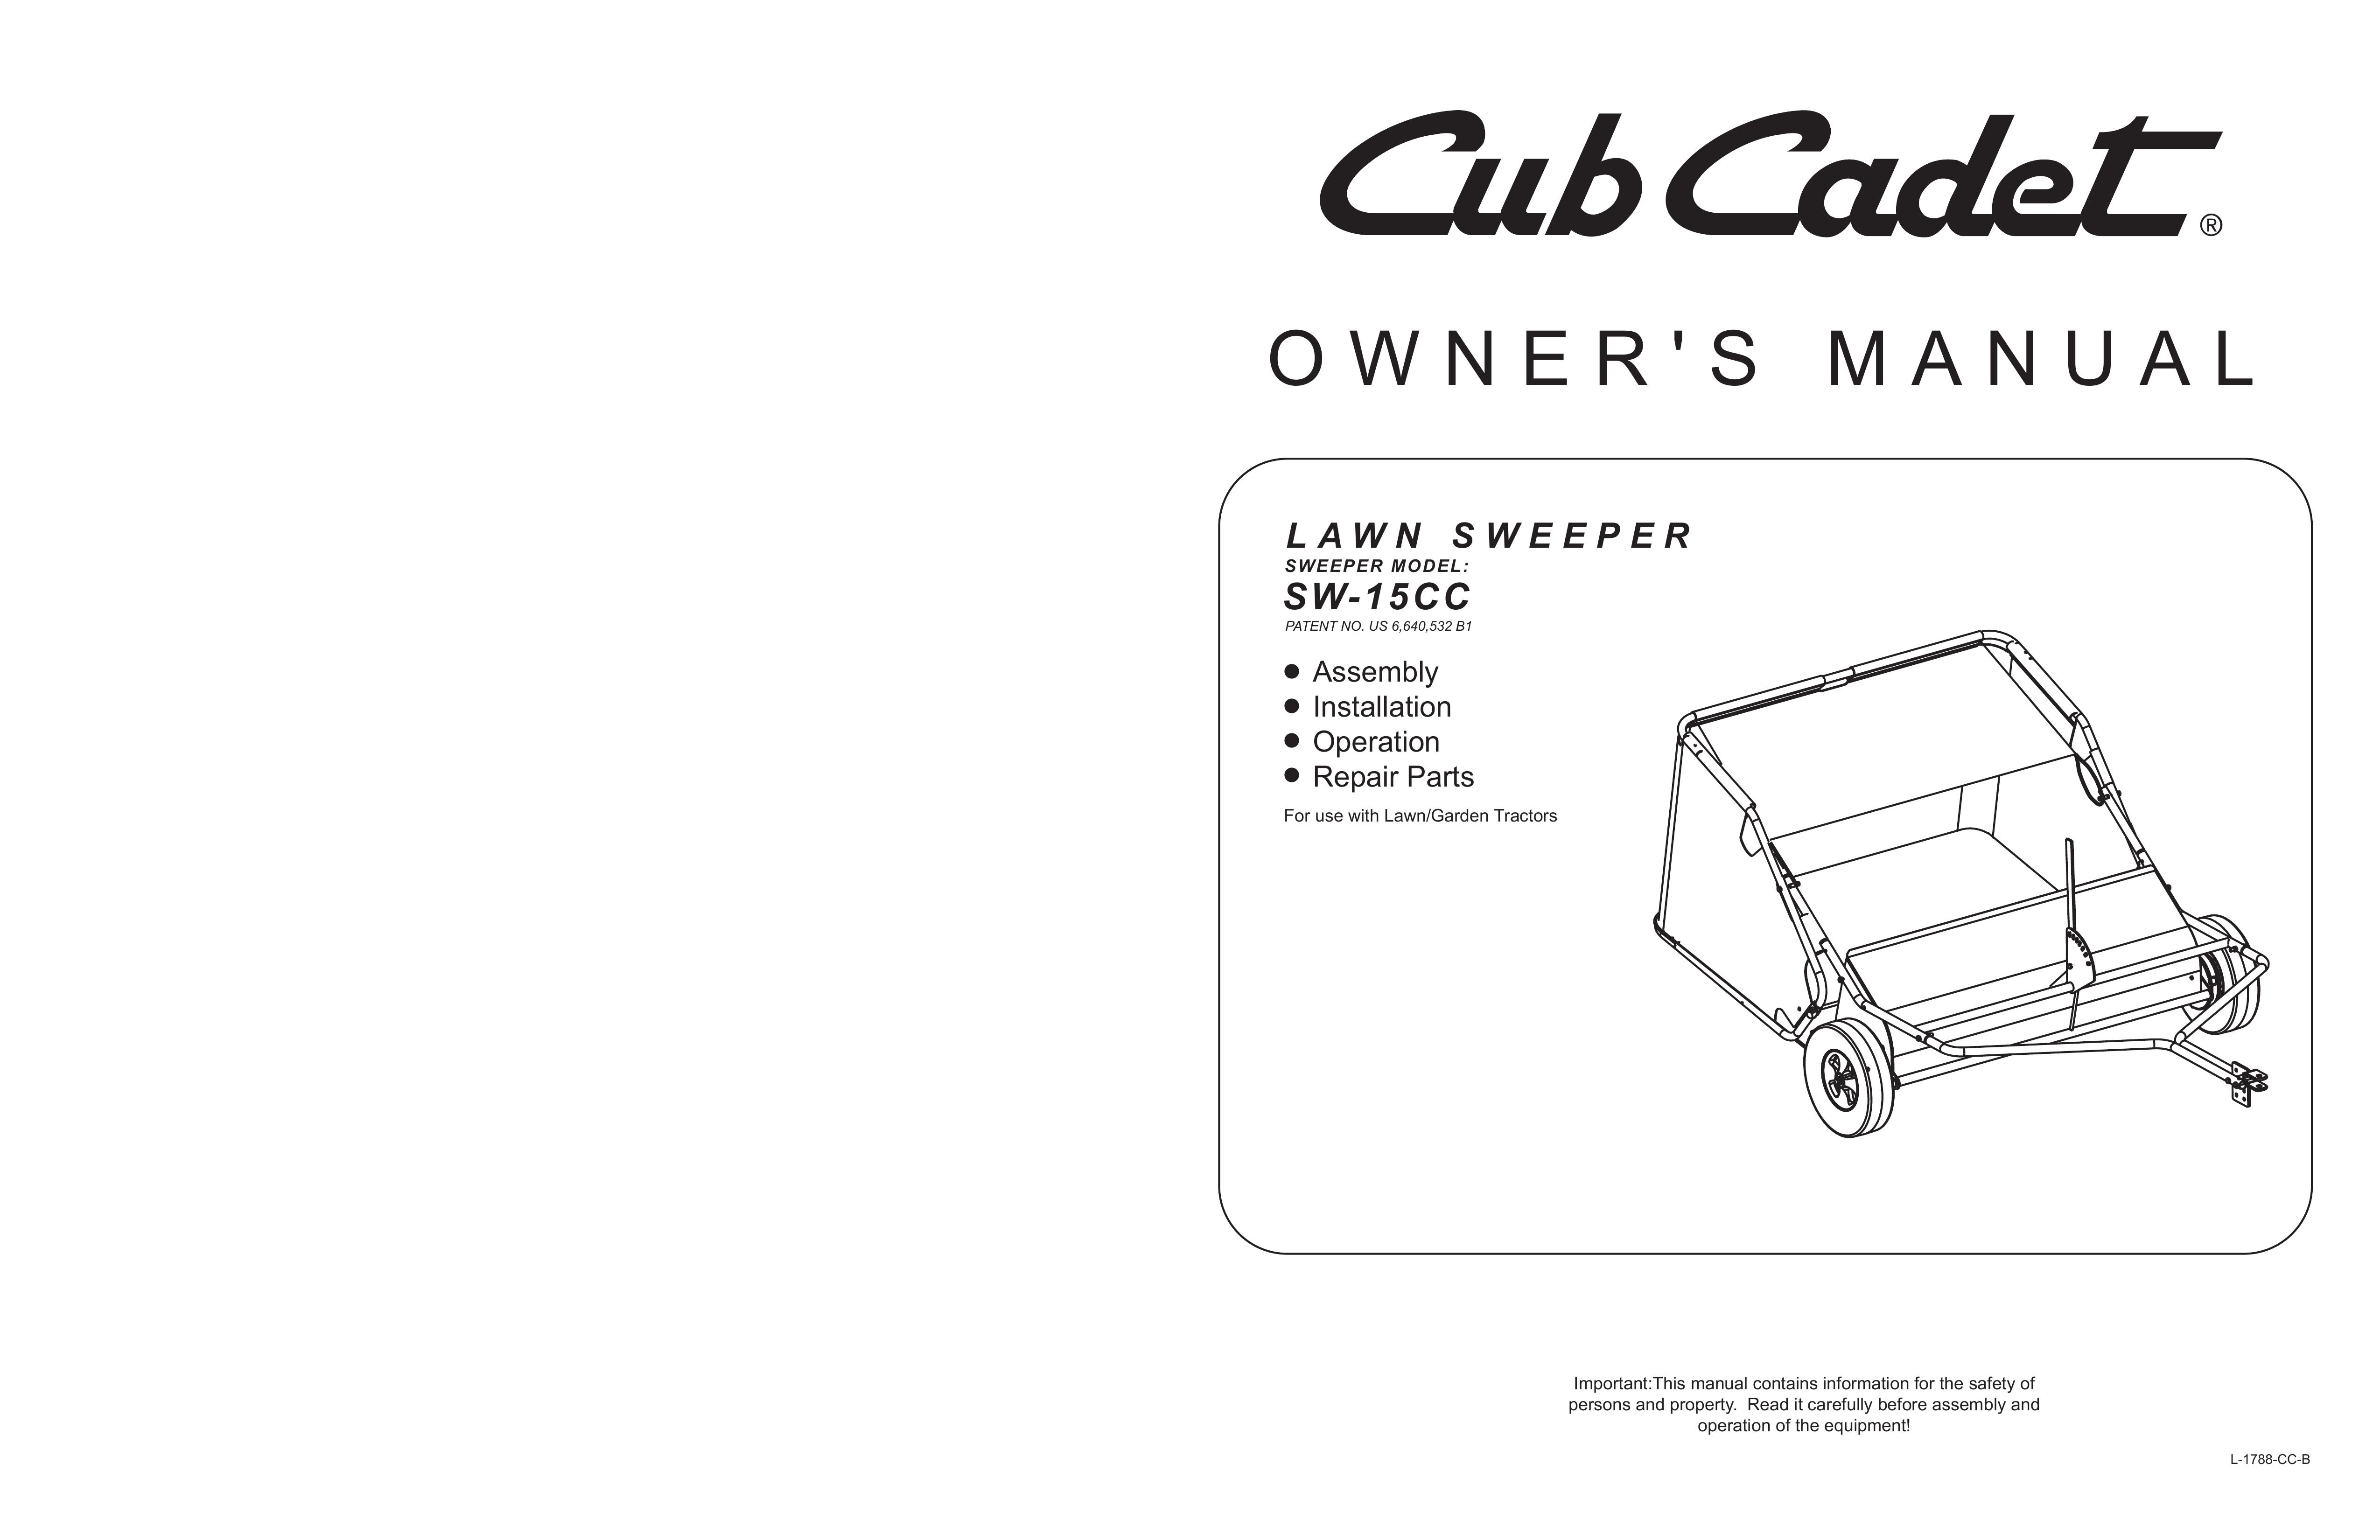 Cub Cadet SW-15CC Lawn Sweeper User Manual